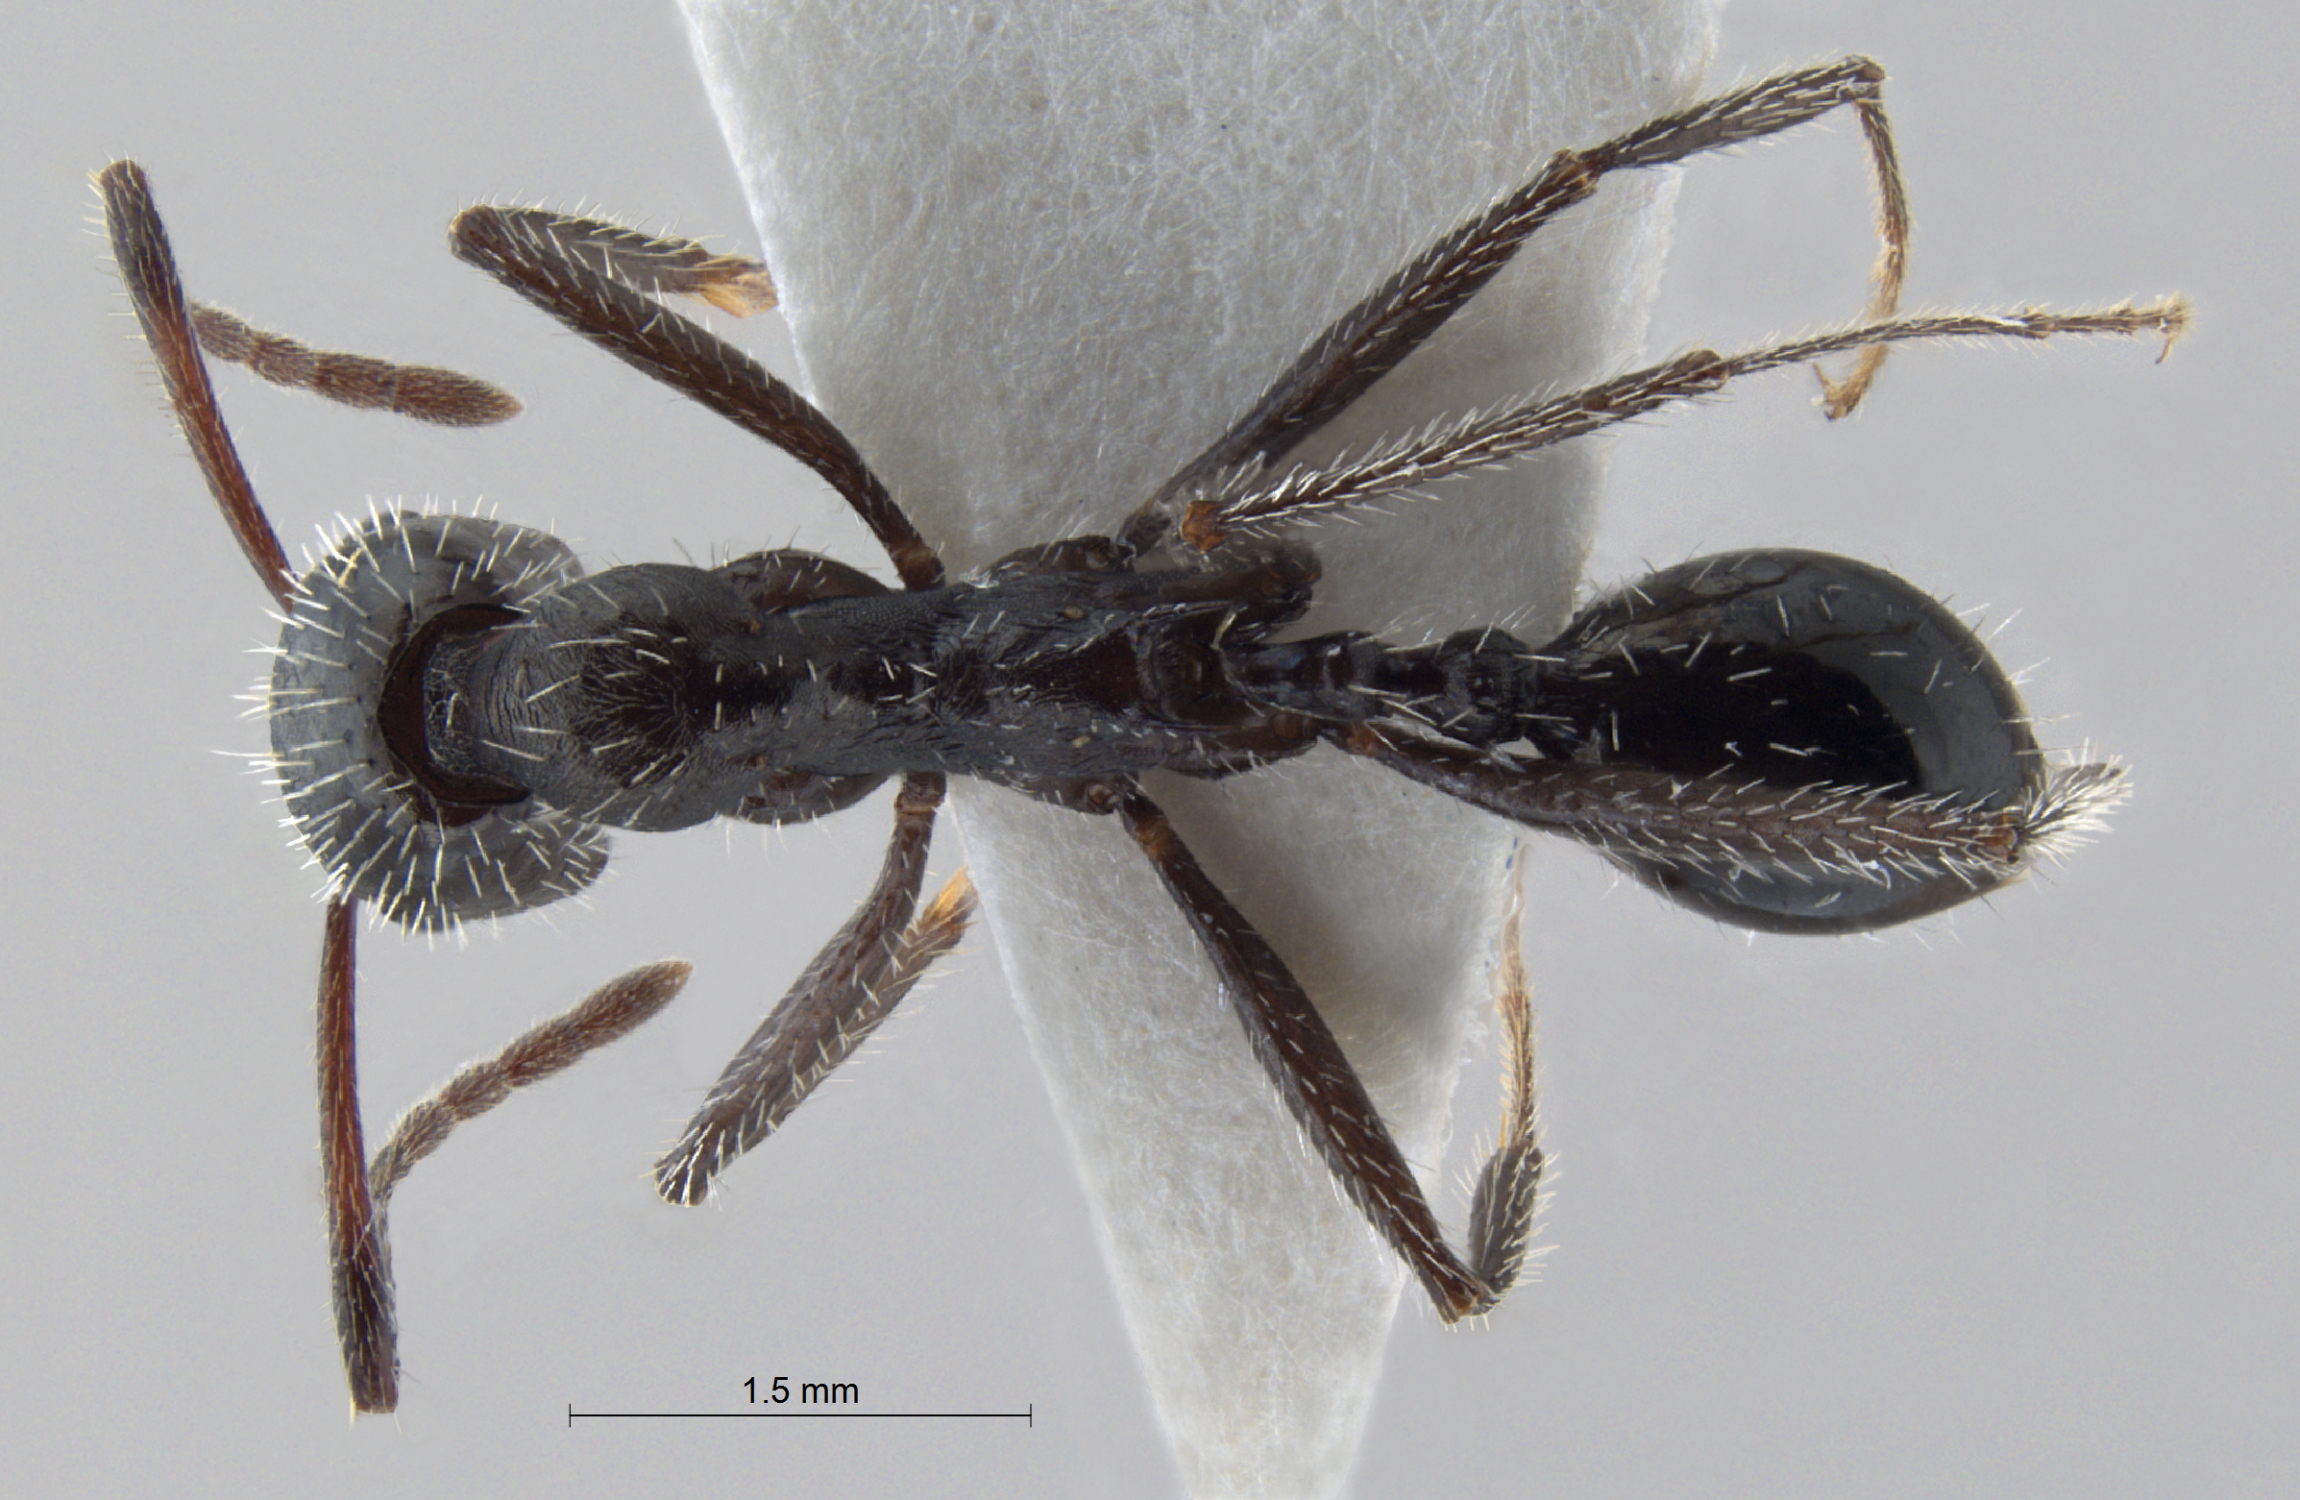  Aphaenogaster spinosa